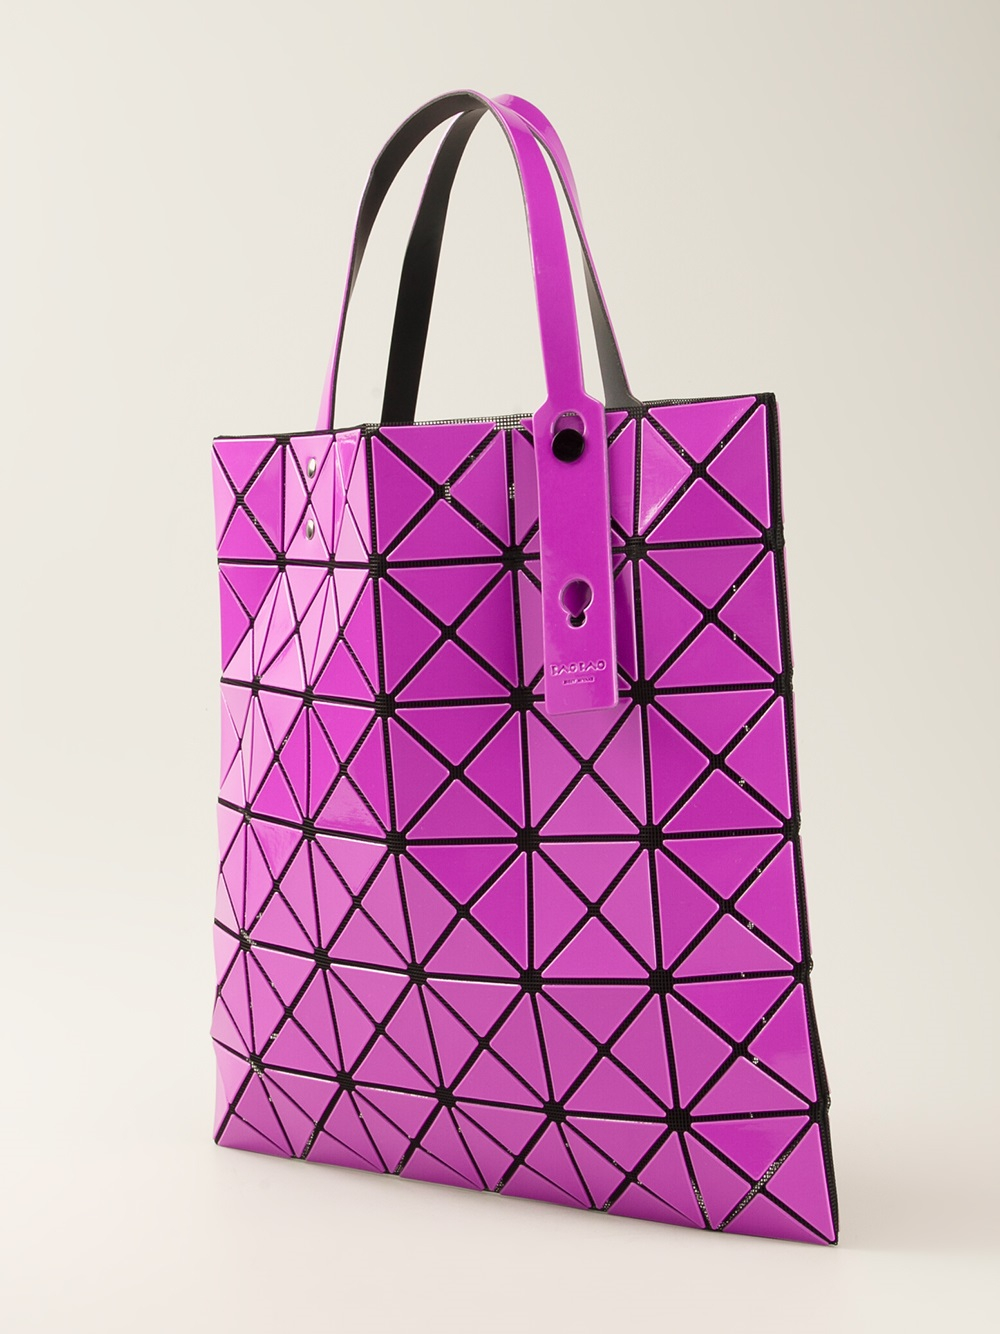 Lyst - Bao Bao Issey Miyake Geometric Panel Tote Bag in Pink